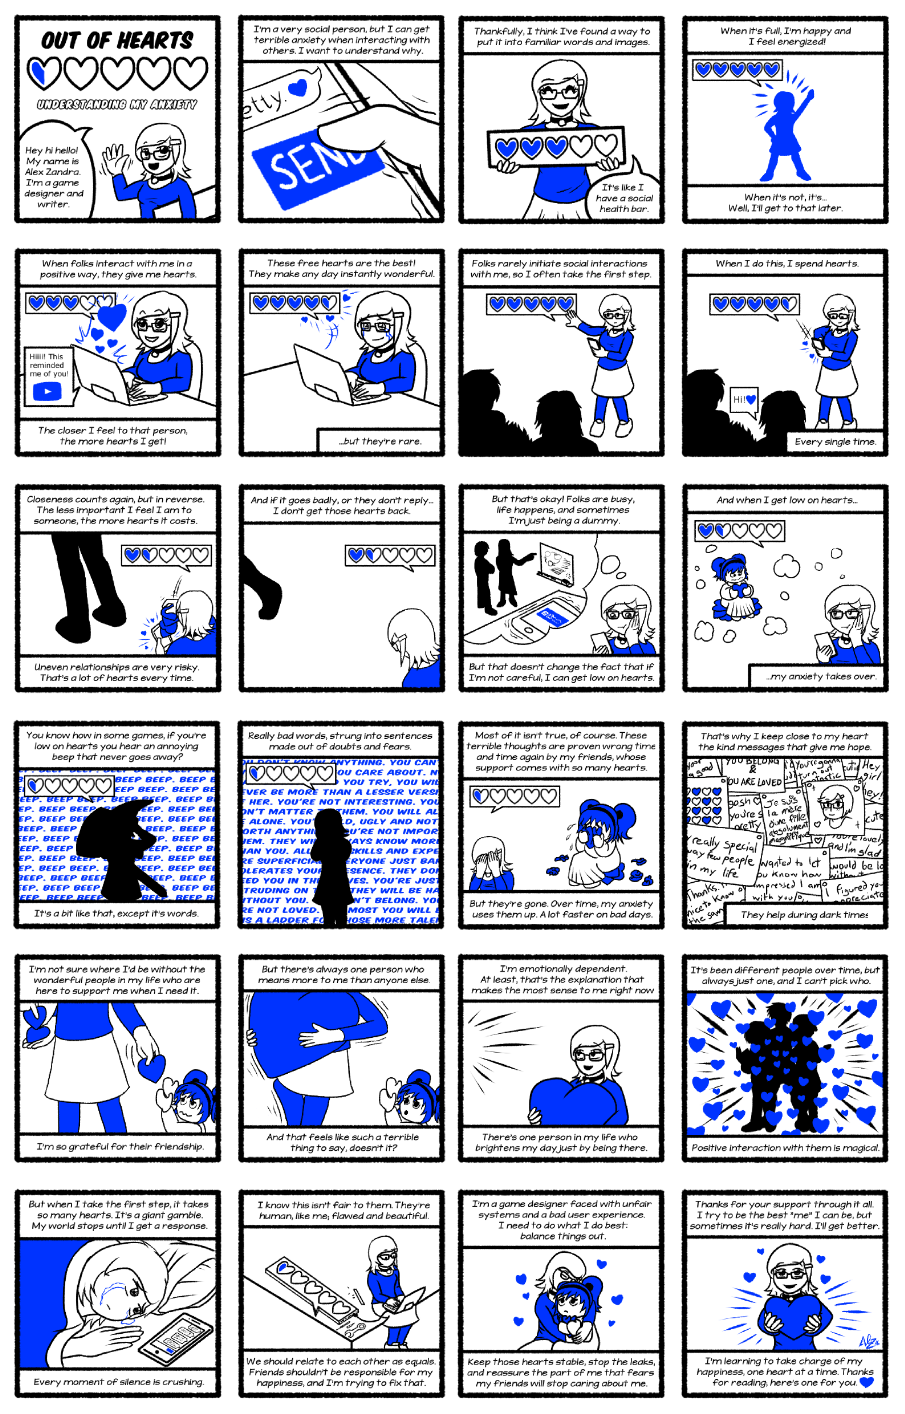 Social Anxiety Comic Risograph Print